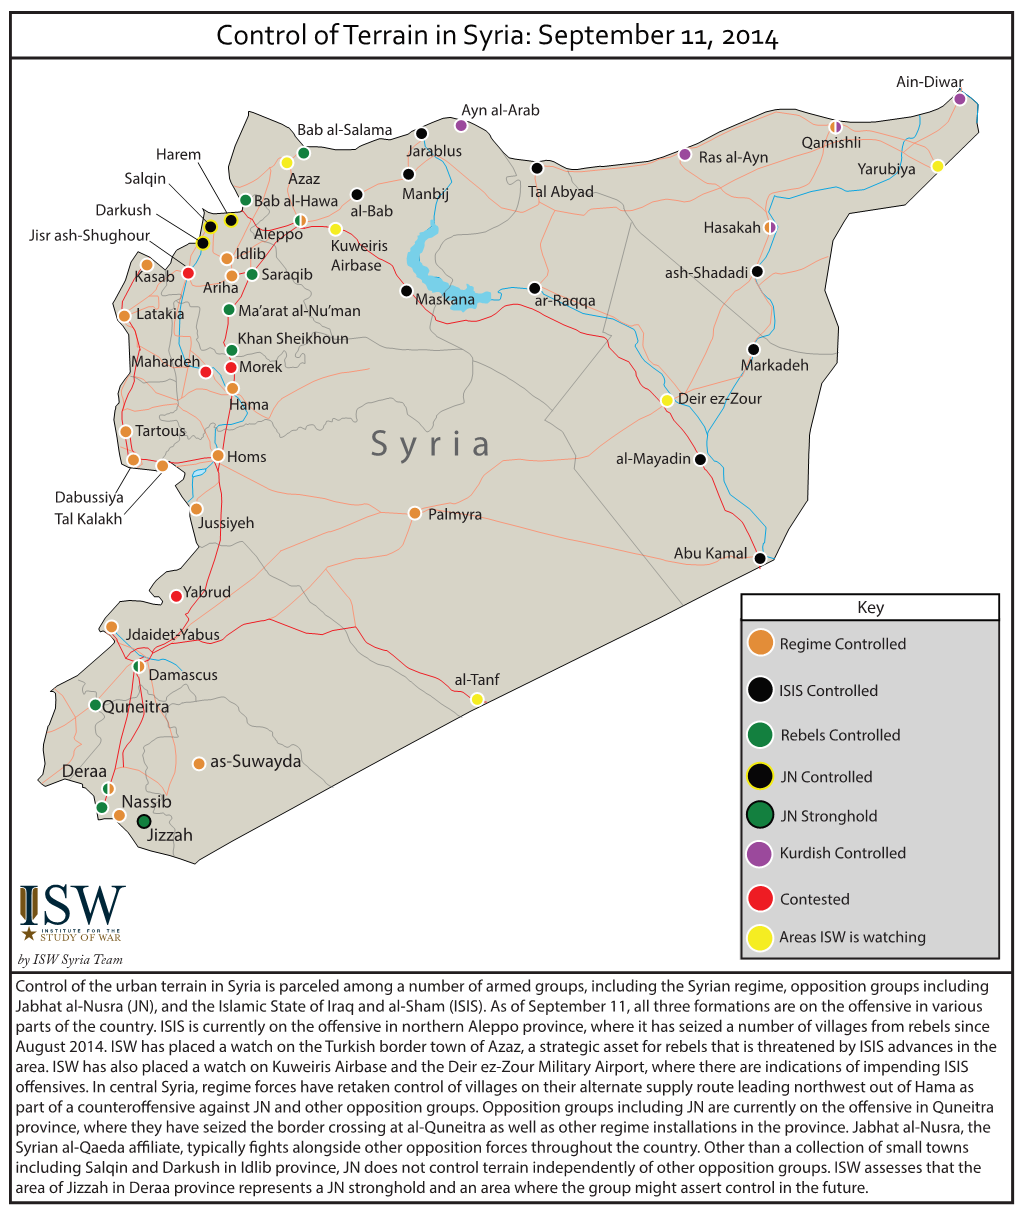 Syria Control Map Sept. 11